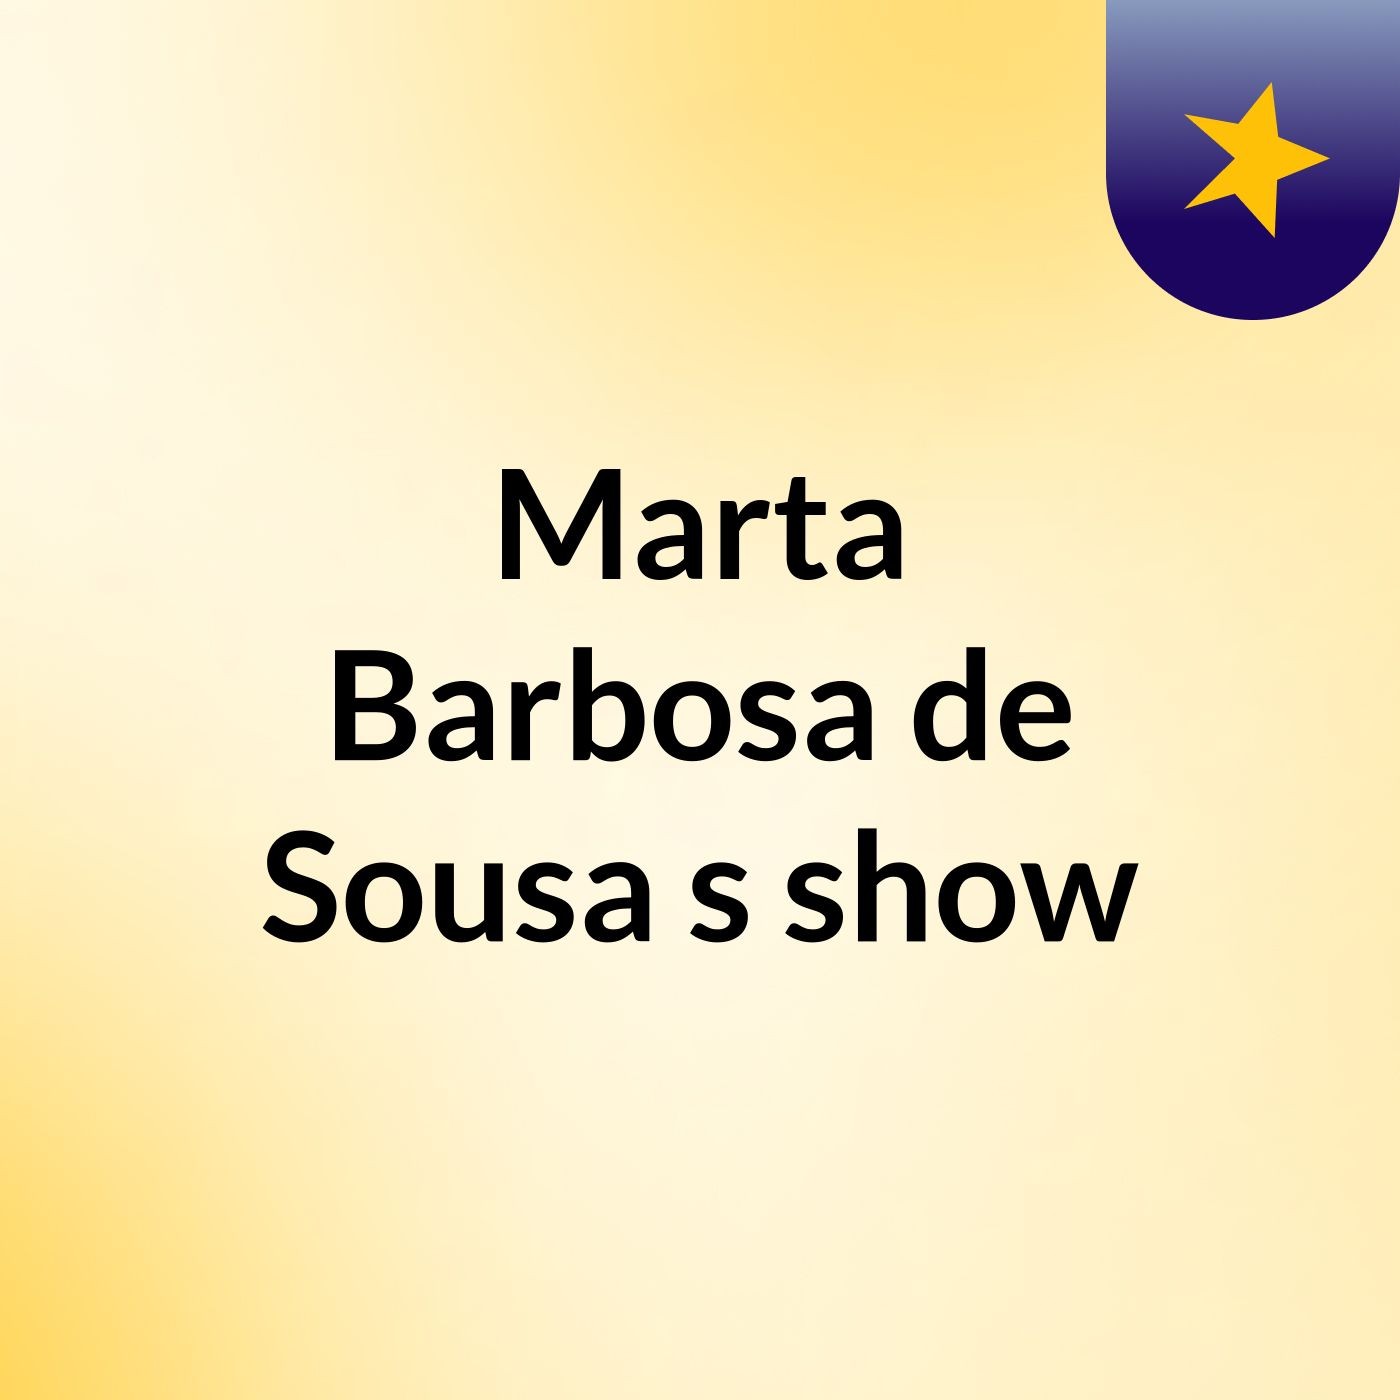 Marta Barbosa de Sousa's show